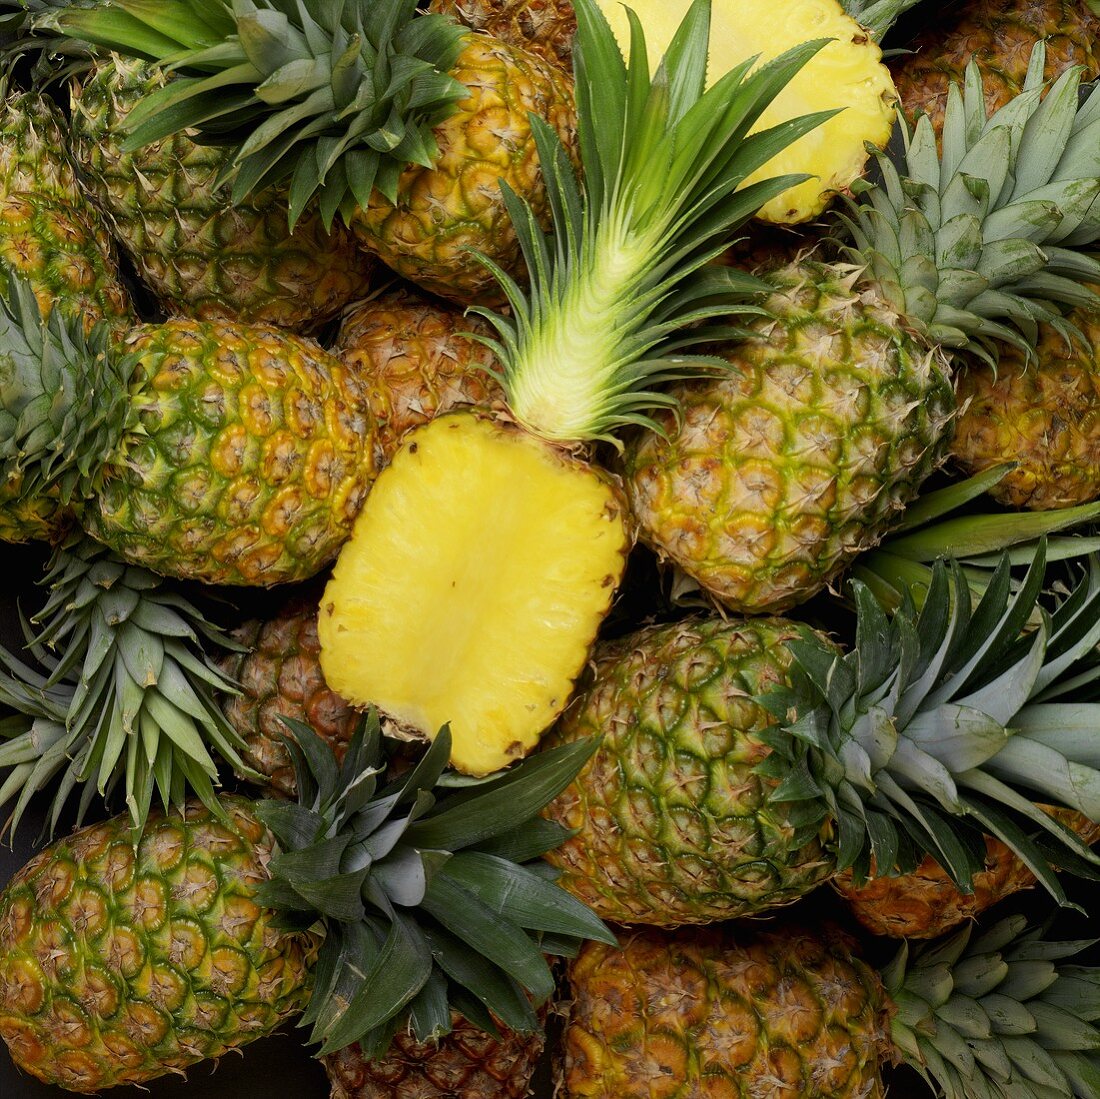 Viele Ananas (bildfüllend)